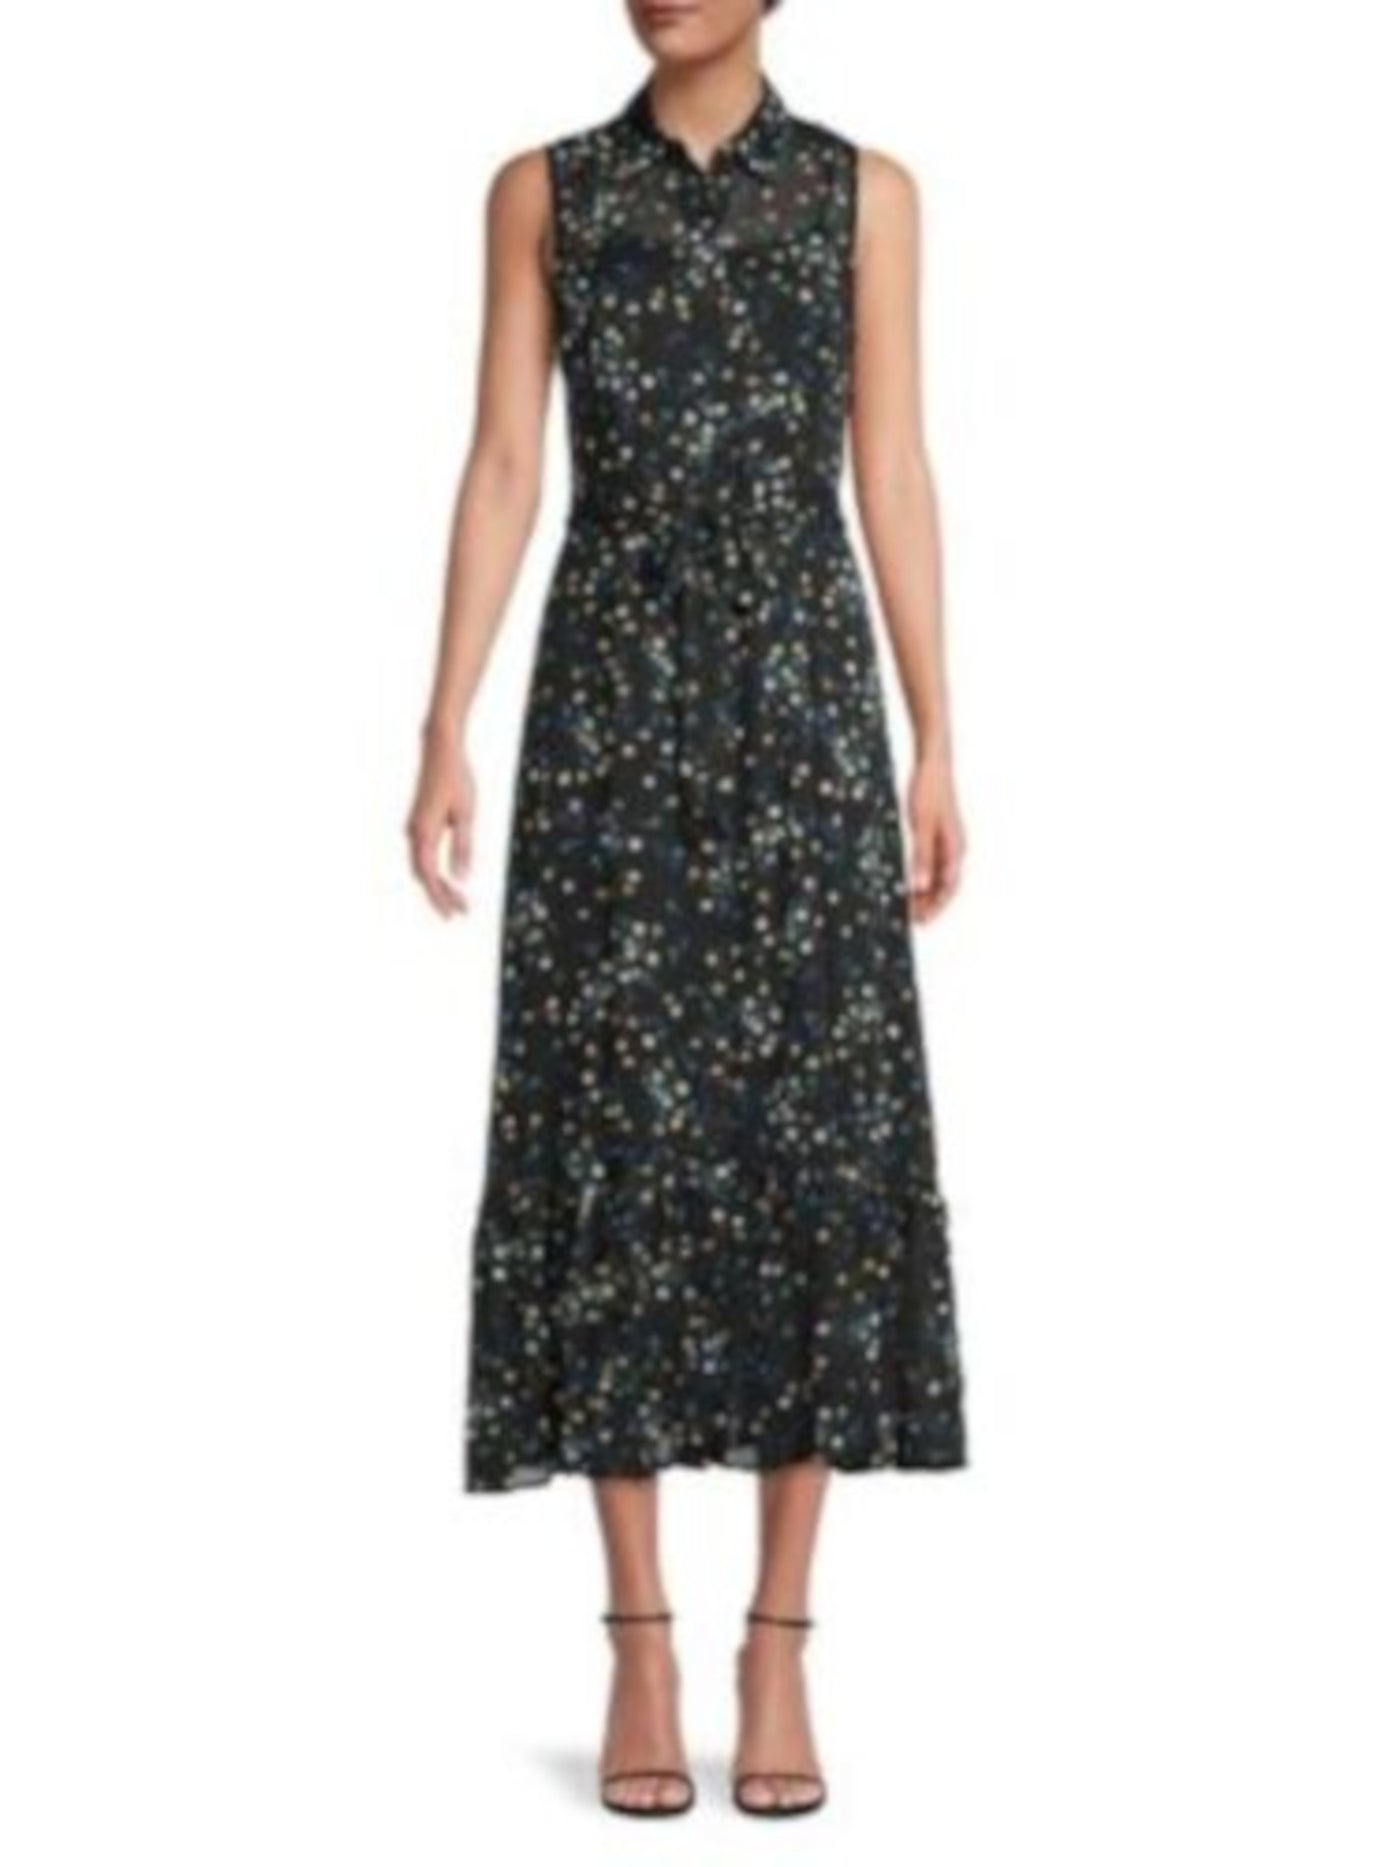 CALVIN KLEIN Womens Black Tie Sheer Lined Pleated Ruffled Floral Sleeveless Collared Tea-Length Shirt Dress 6